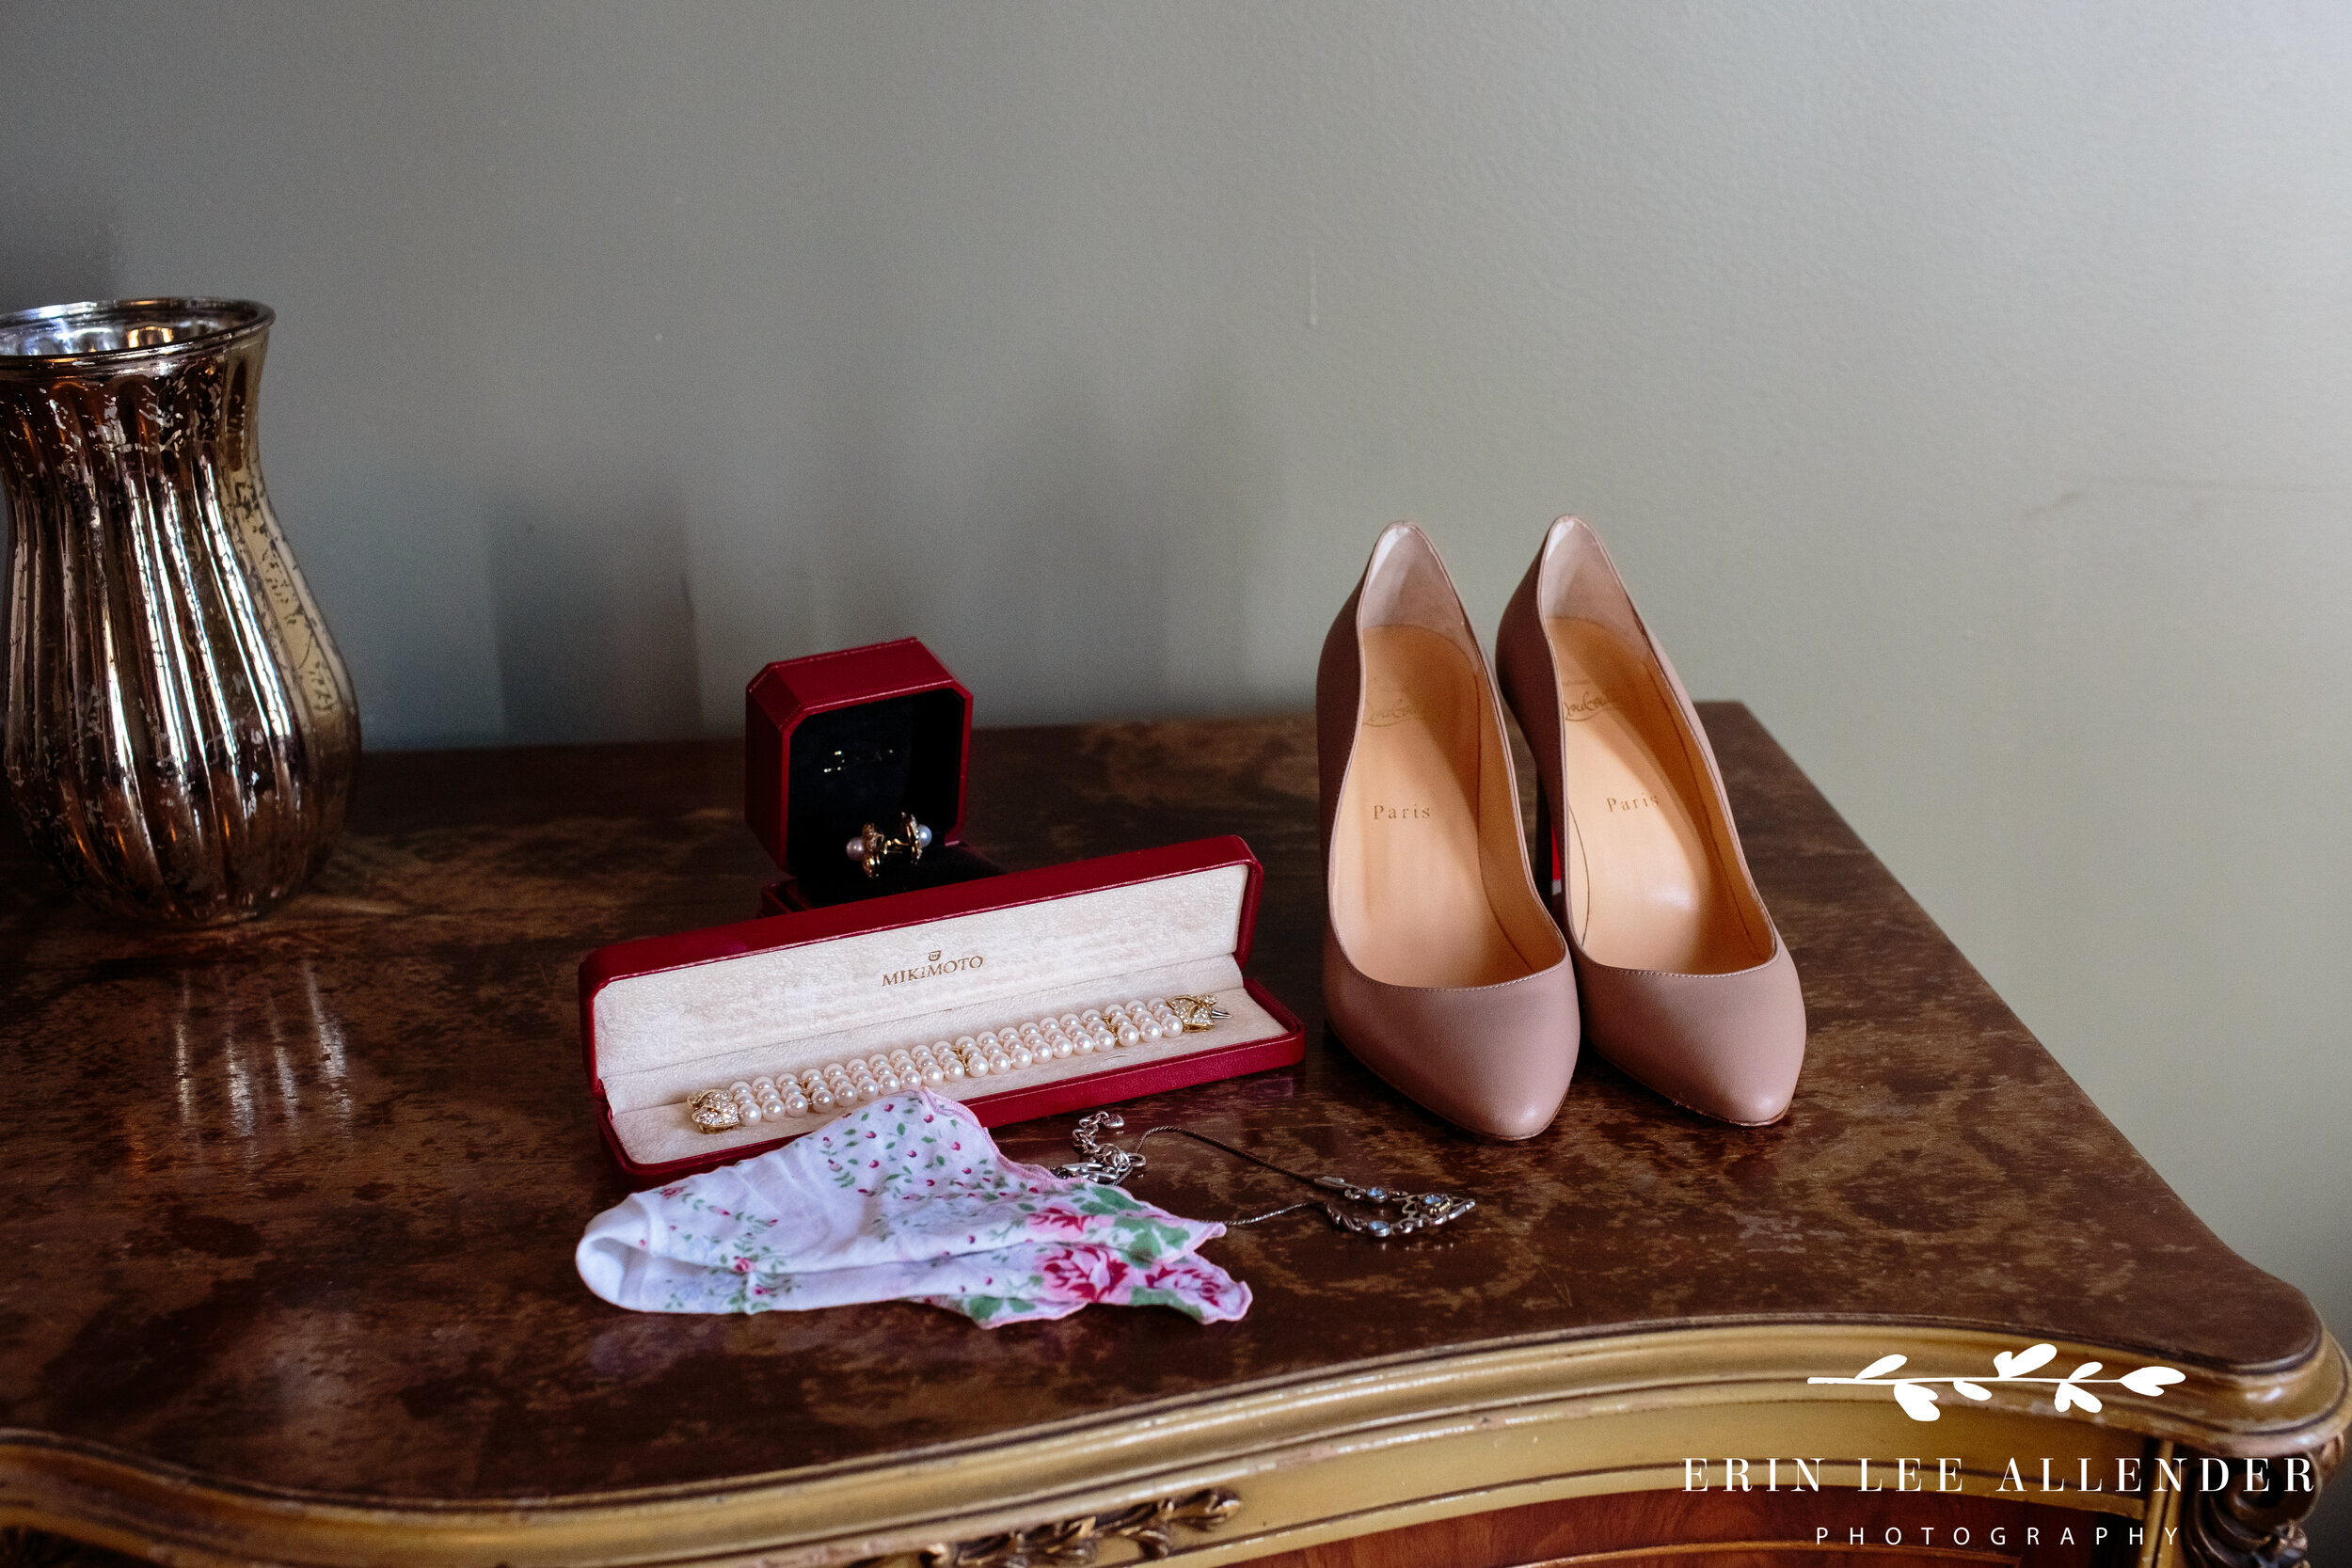 Louboutin-Wedding-Shoes